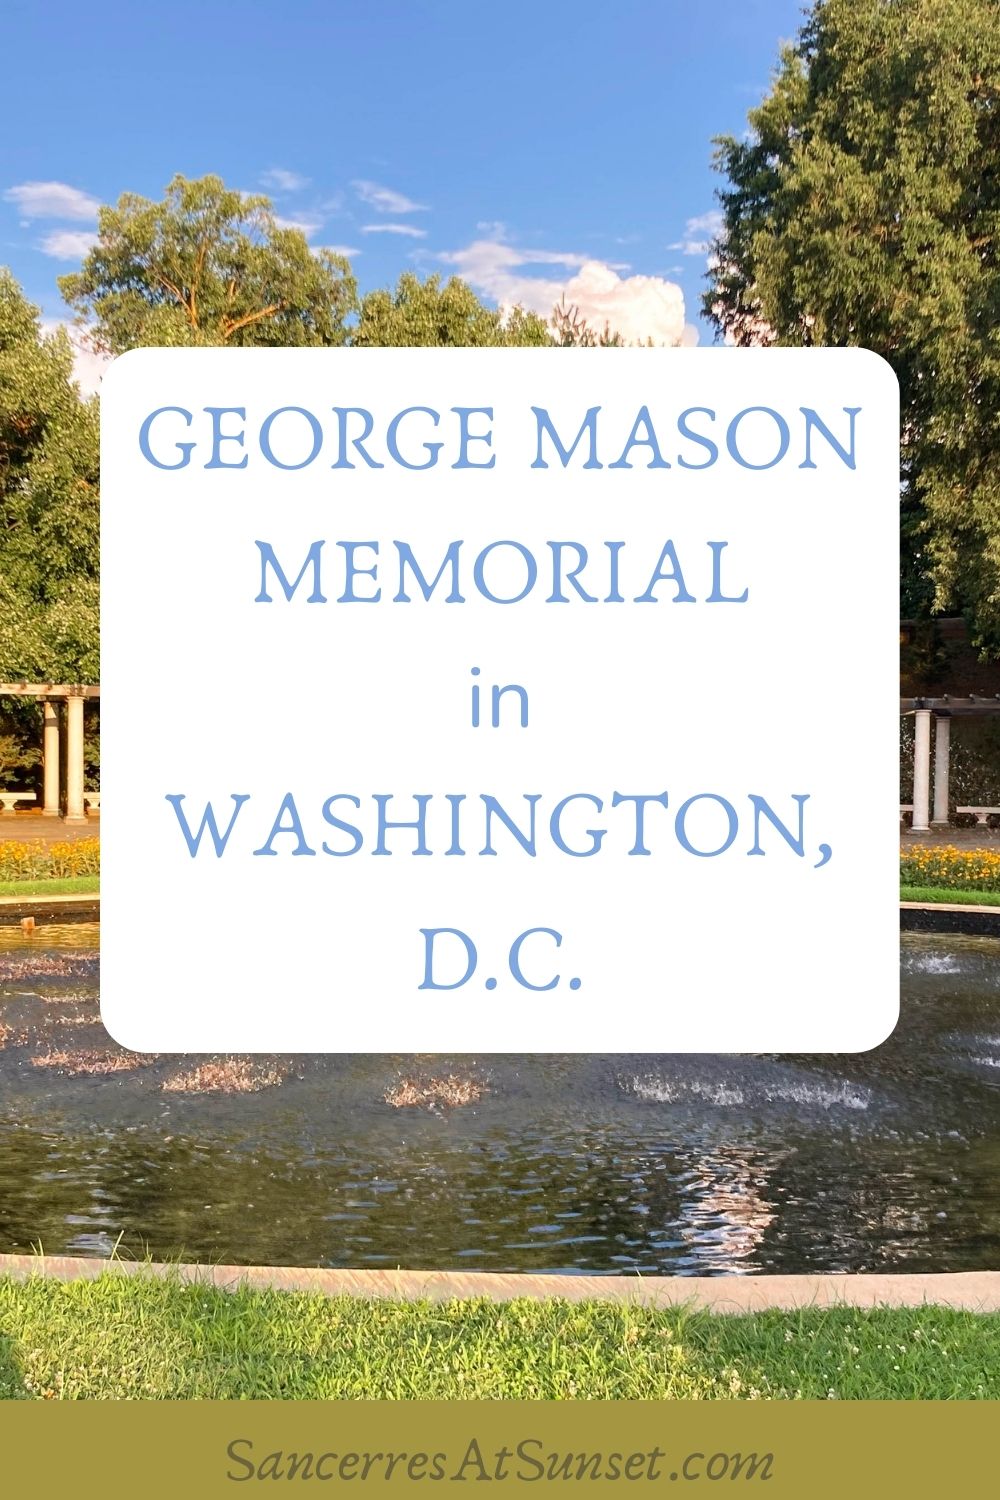 George Mason Memorial in Washington, D.C.